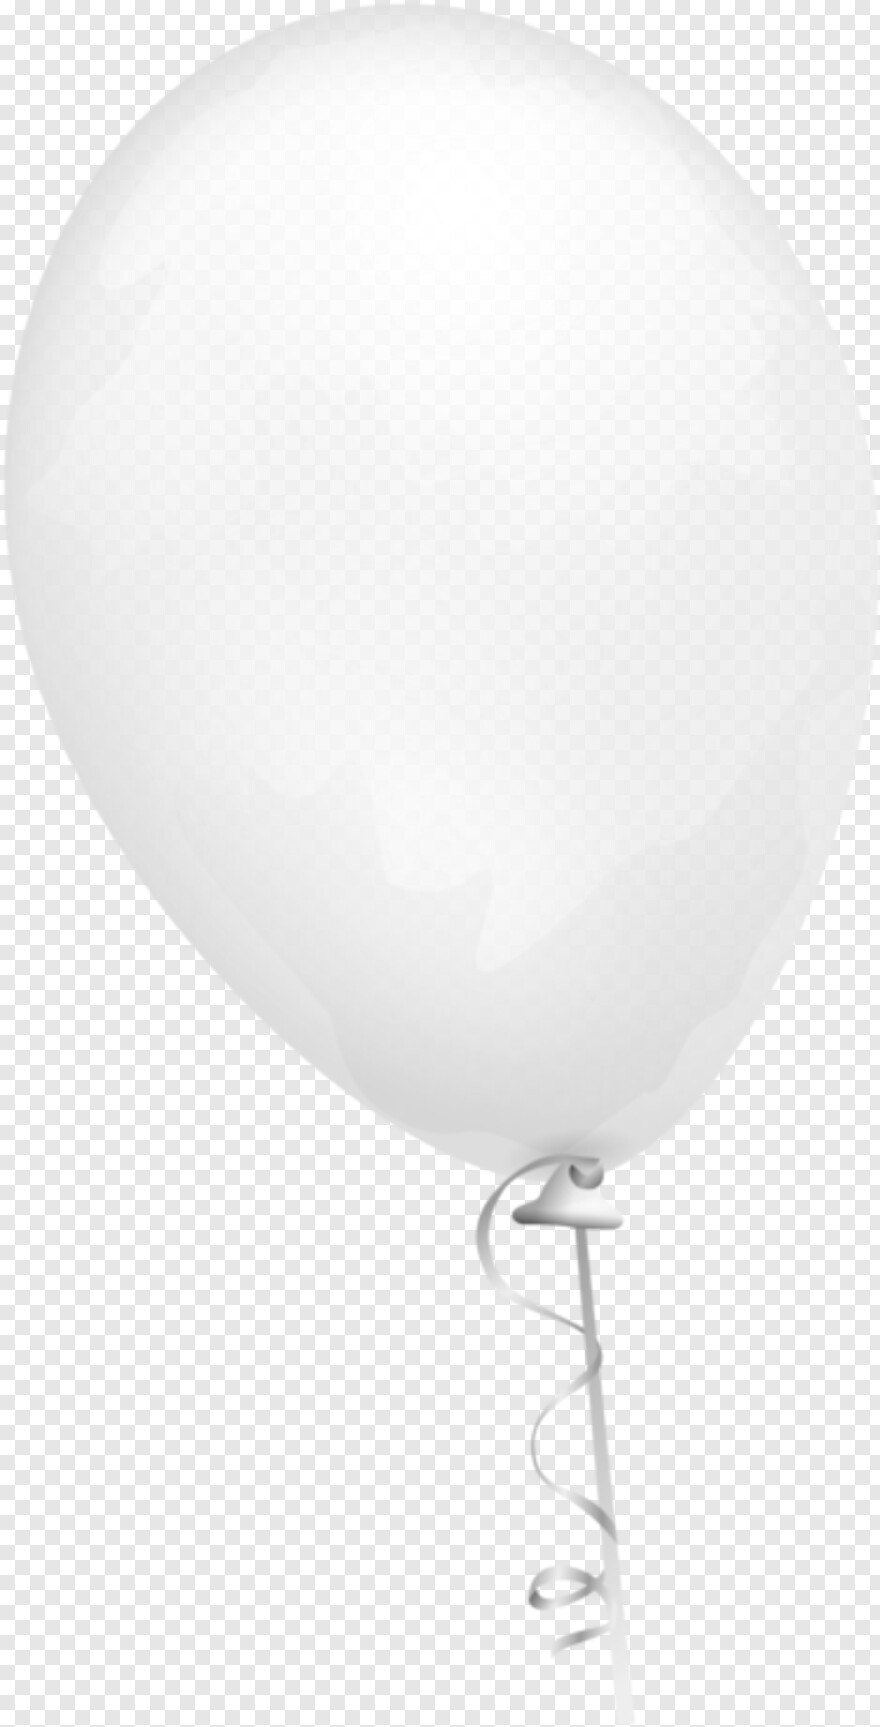 balloon-transparent-background # 415935